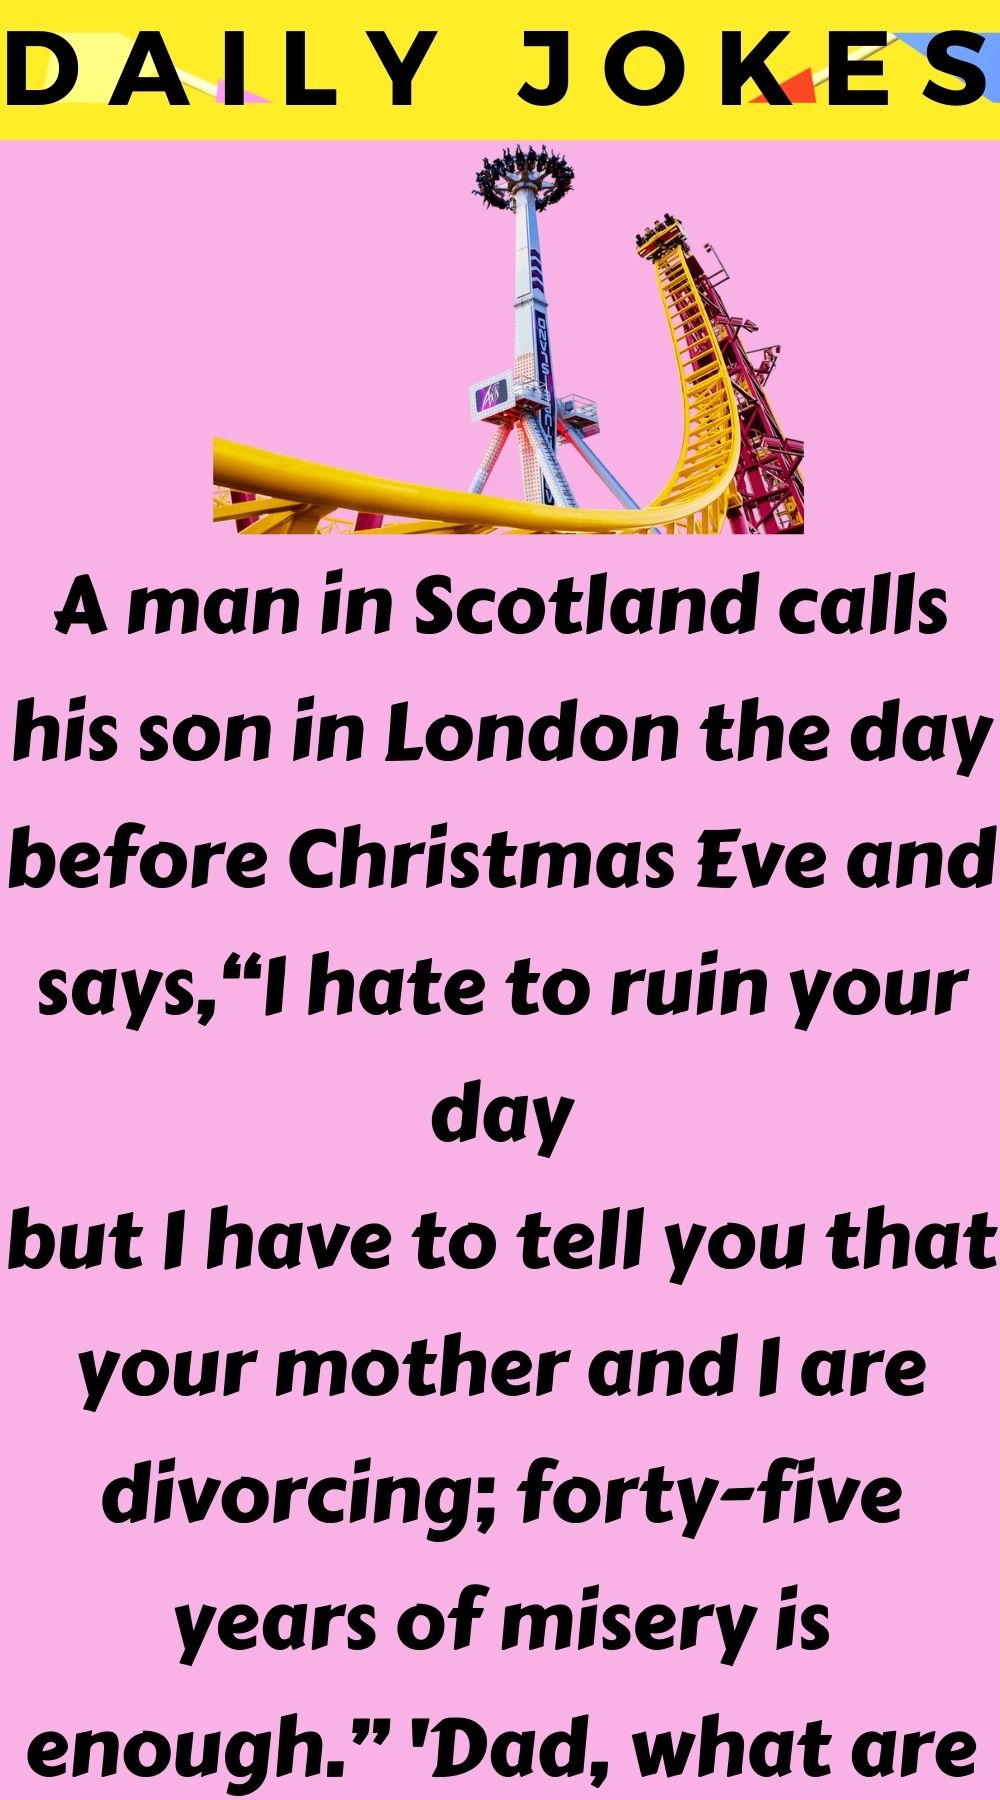 A man in Scotland calls his son in London